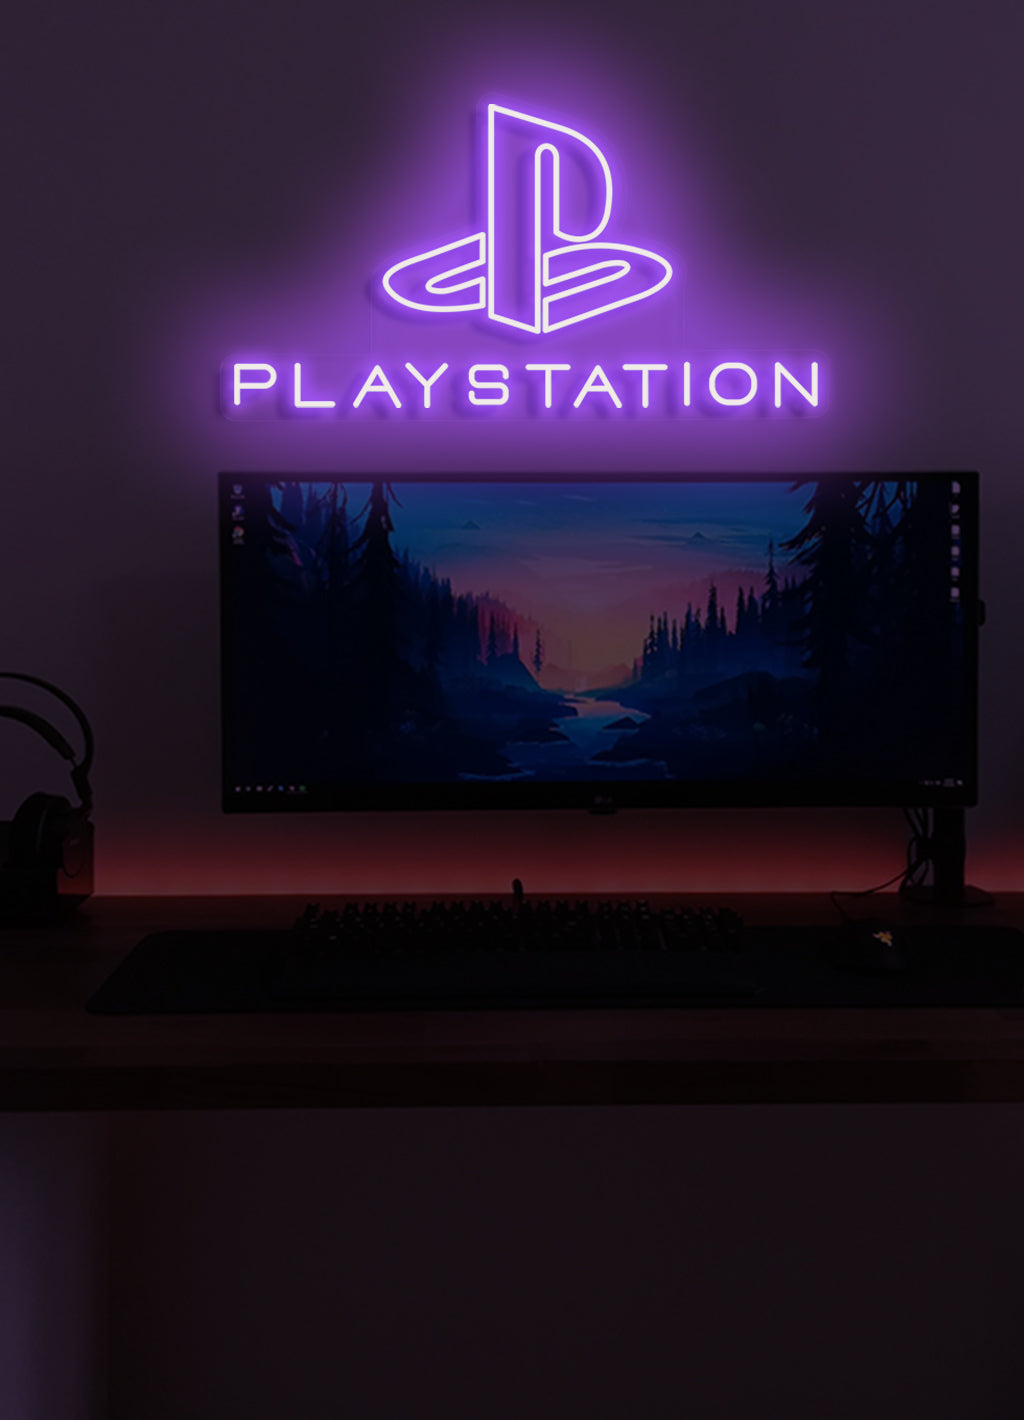 Playstation - LED Neon skilt